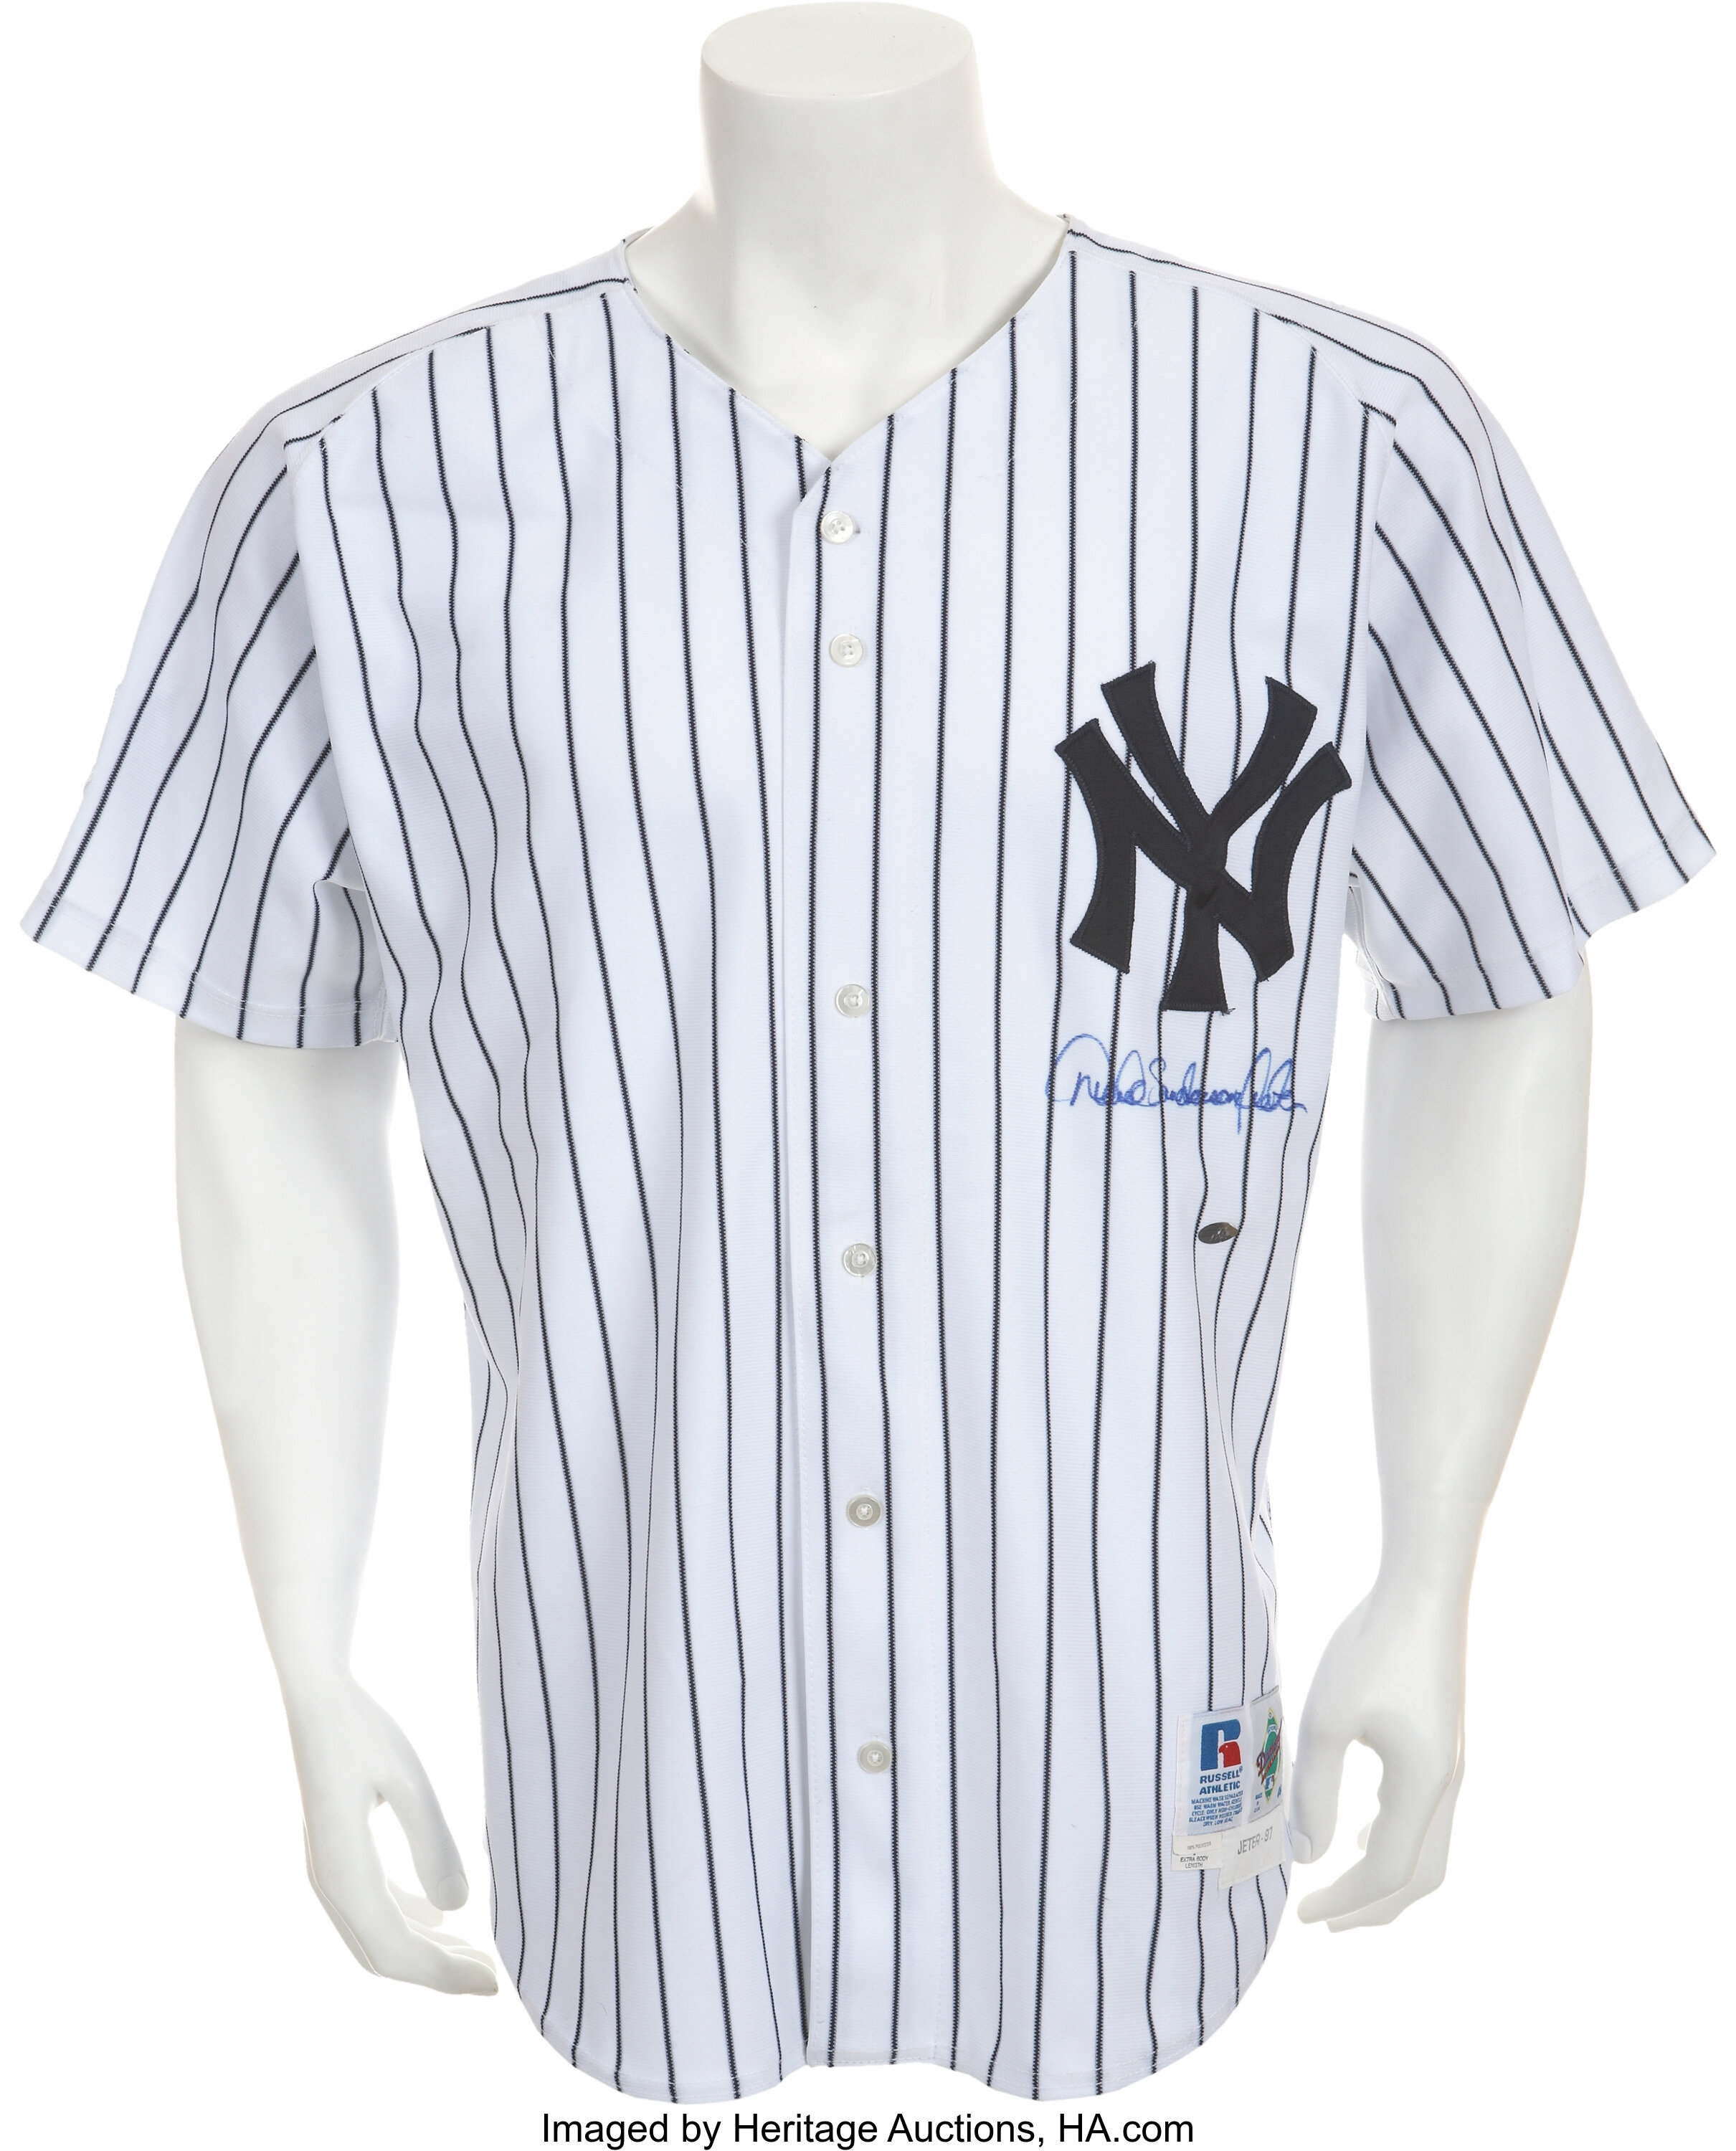 Derek Jeter New York Yankees Game Worn Jersey One of One 